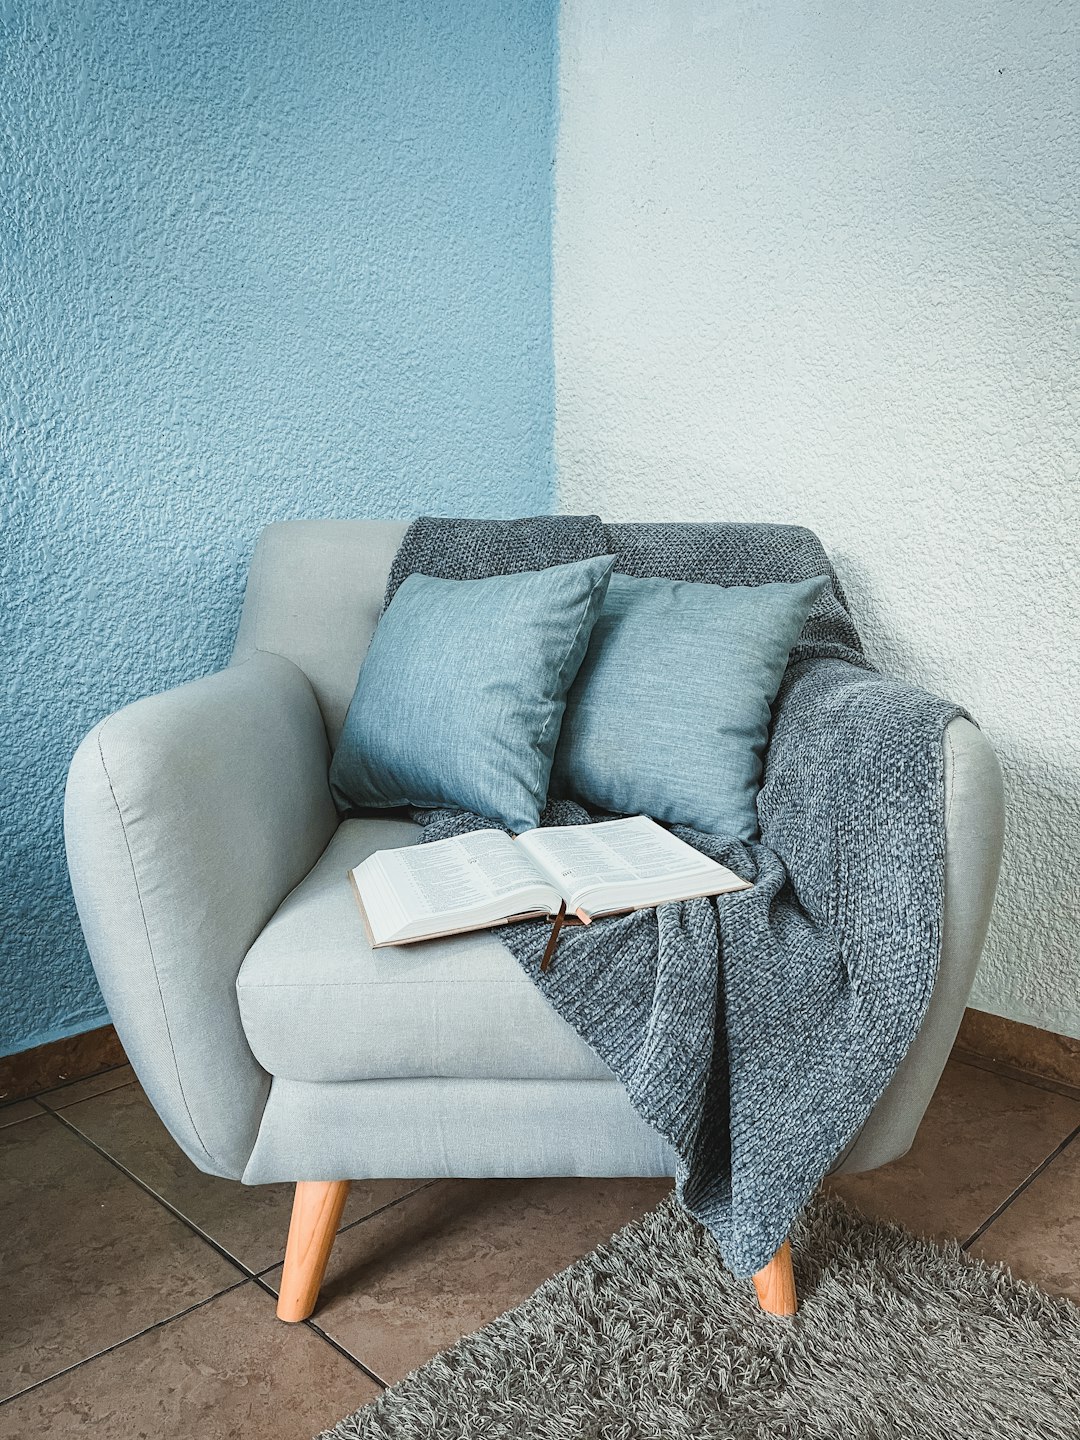  gray sofa with throw pillows cushion